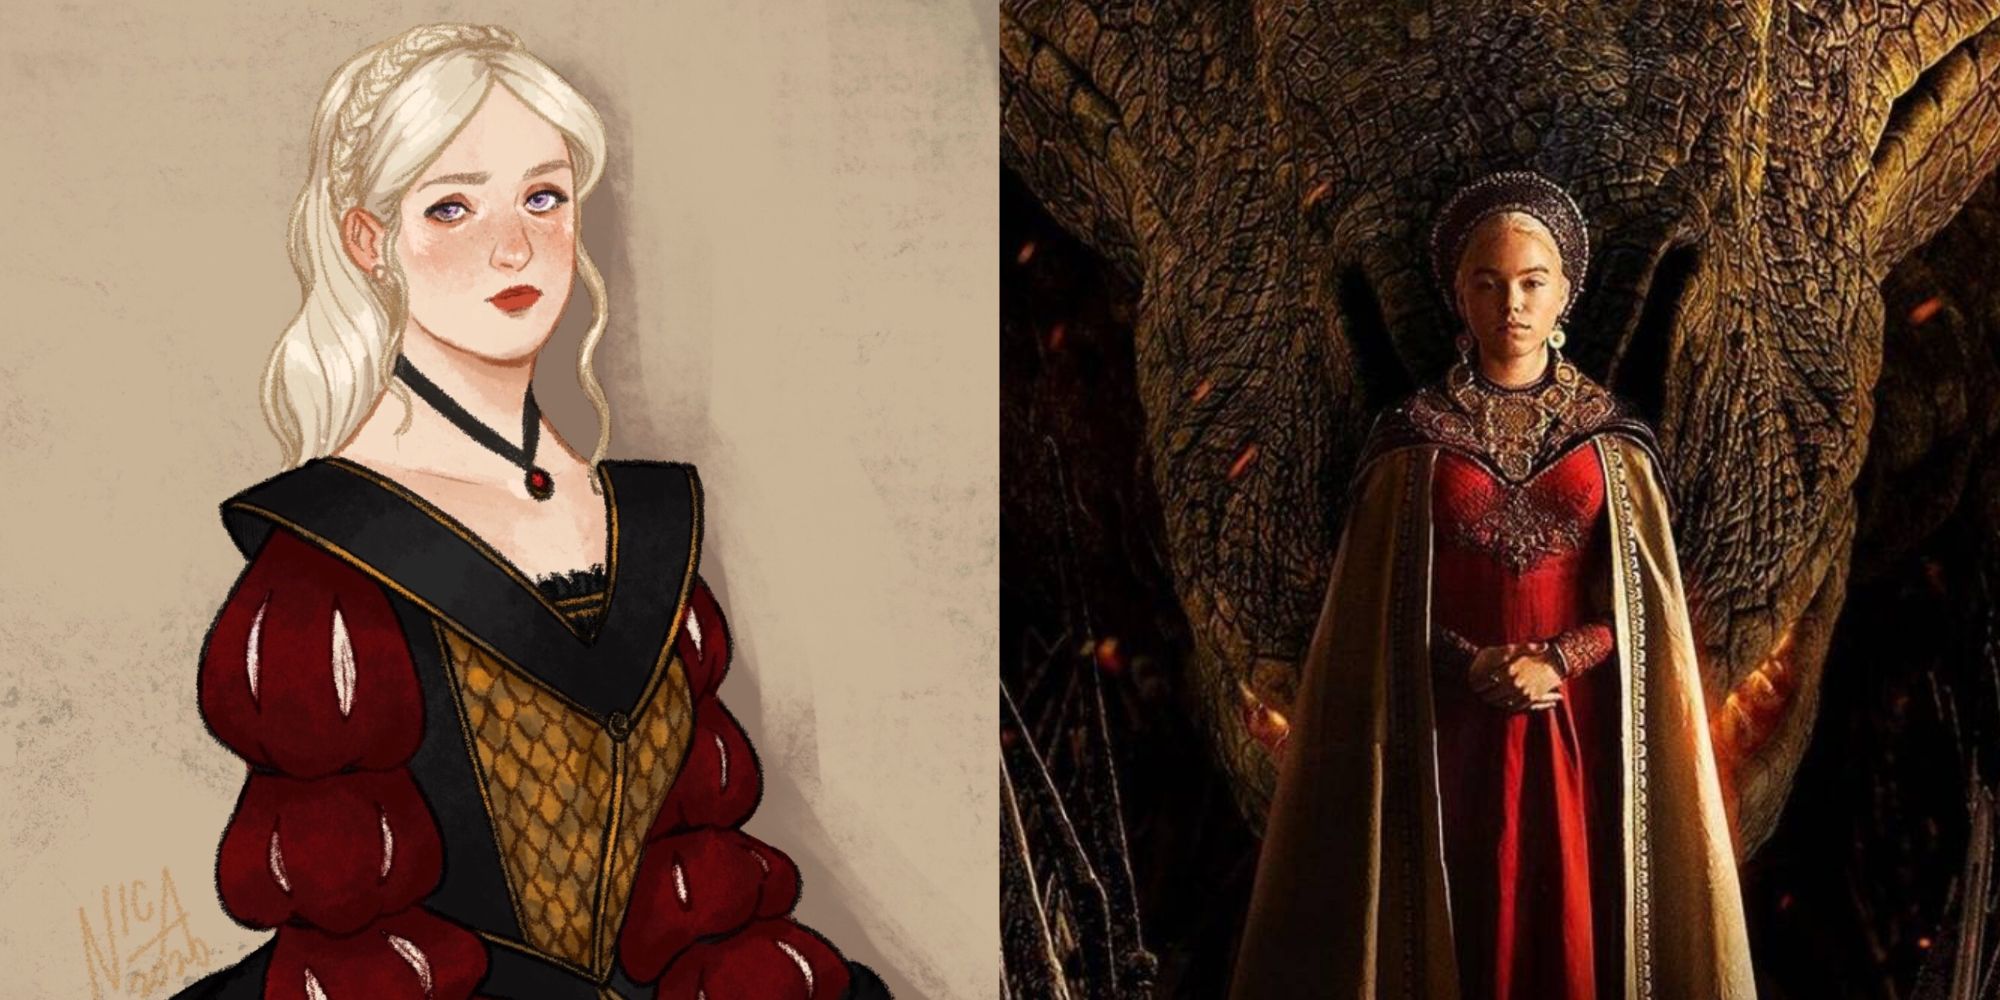 Rhaenyra Targaryen art and house of the dragon photo